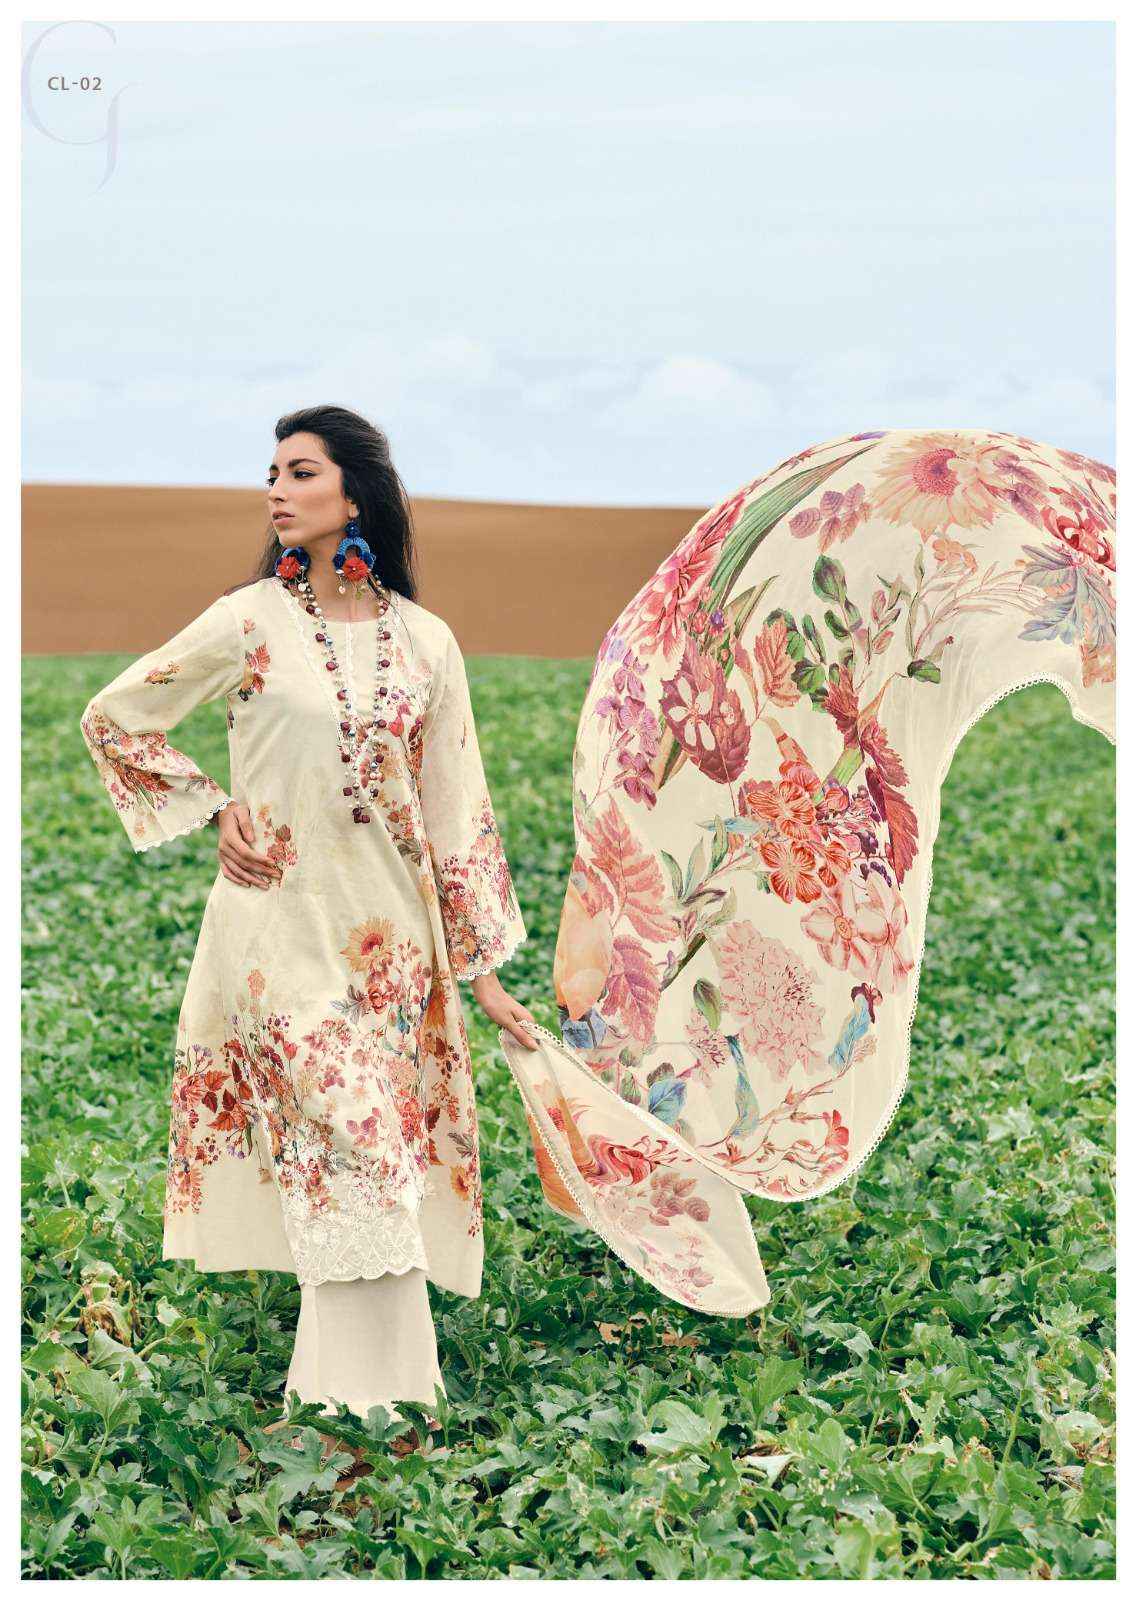 Varsha Camilla Latest Style Cotton Ladies Dress Material ( 5 PCS CATALOG )